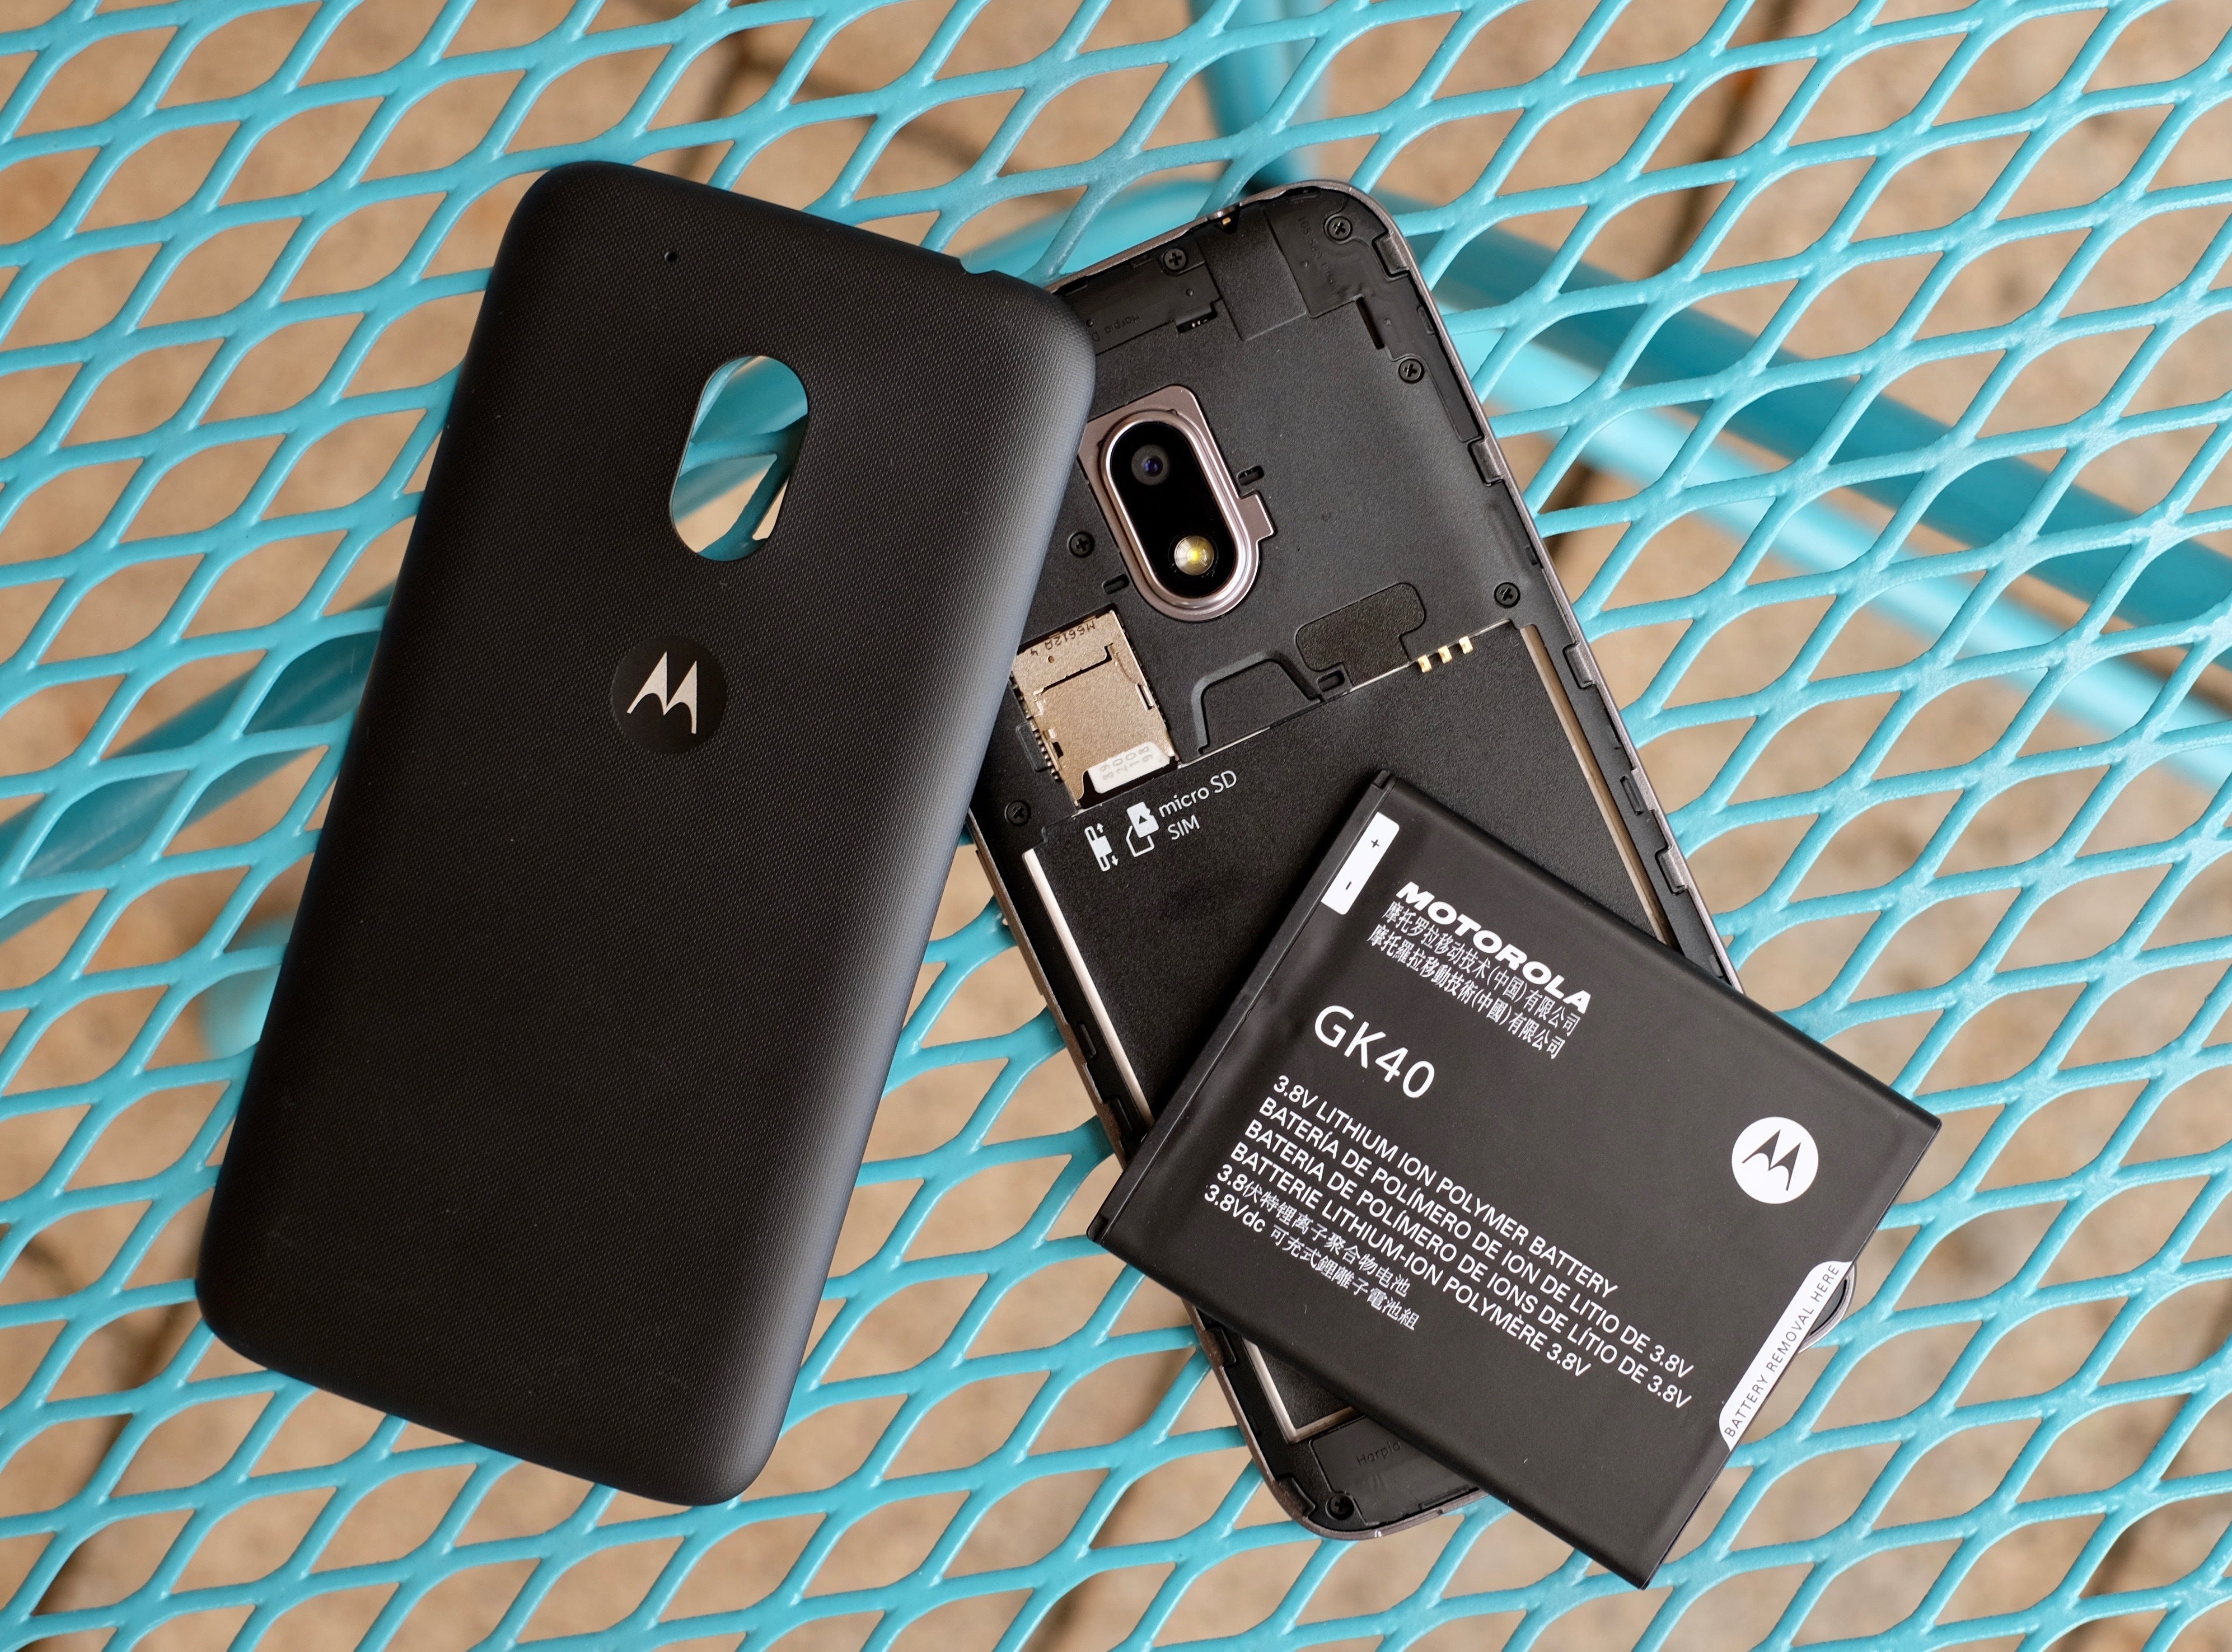 Motorola Moto G4 Play: The Least Expensive G4